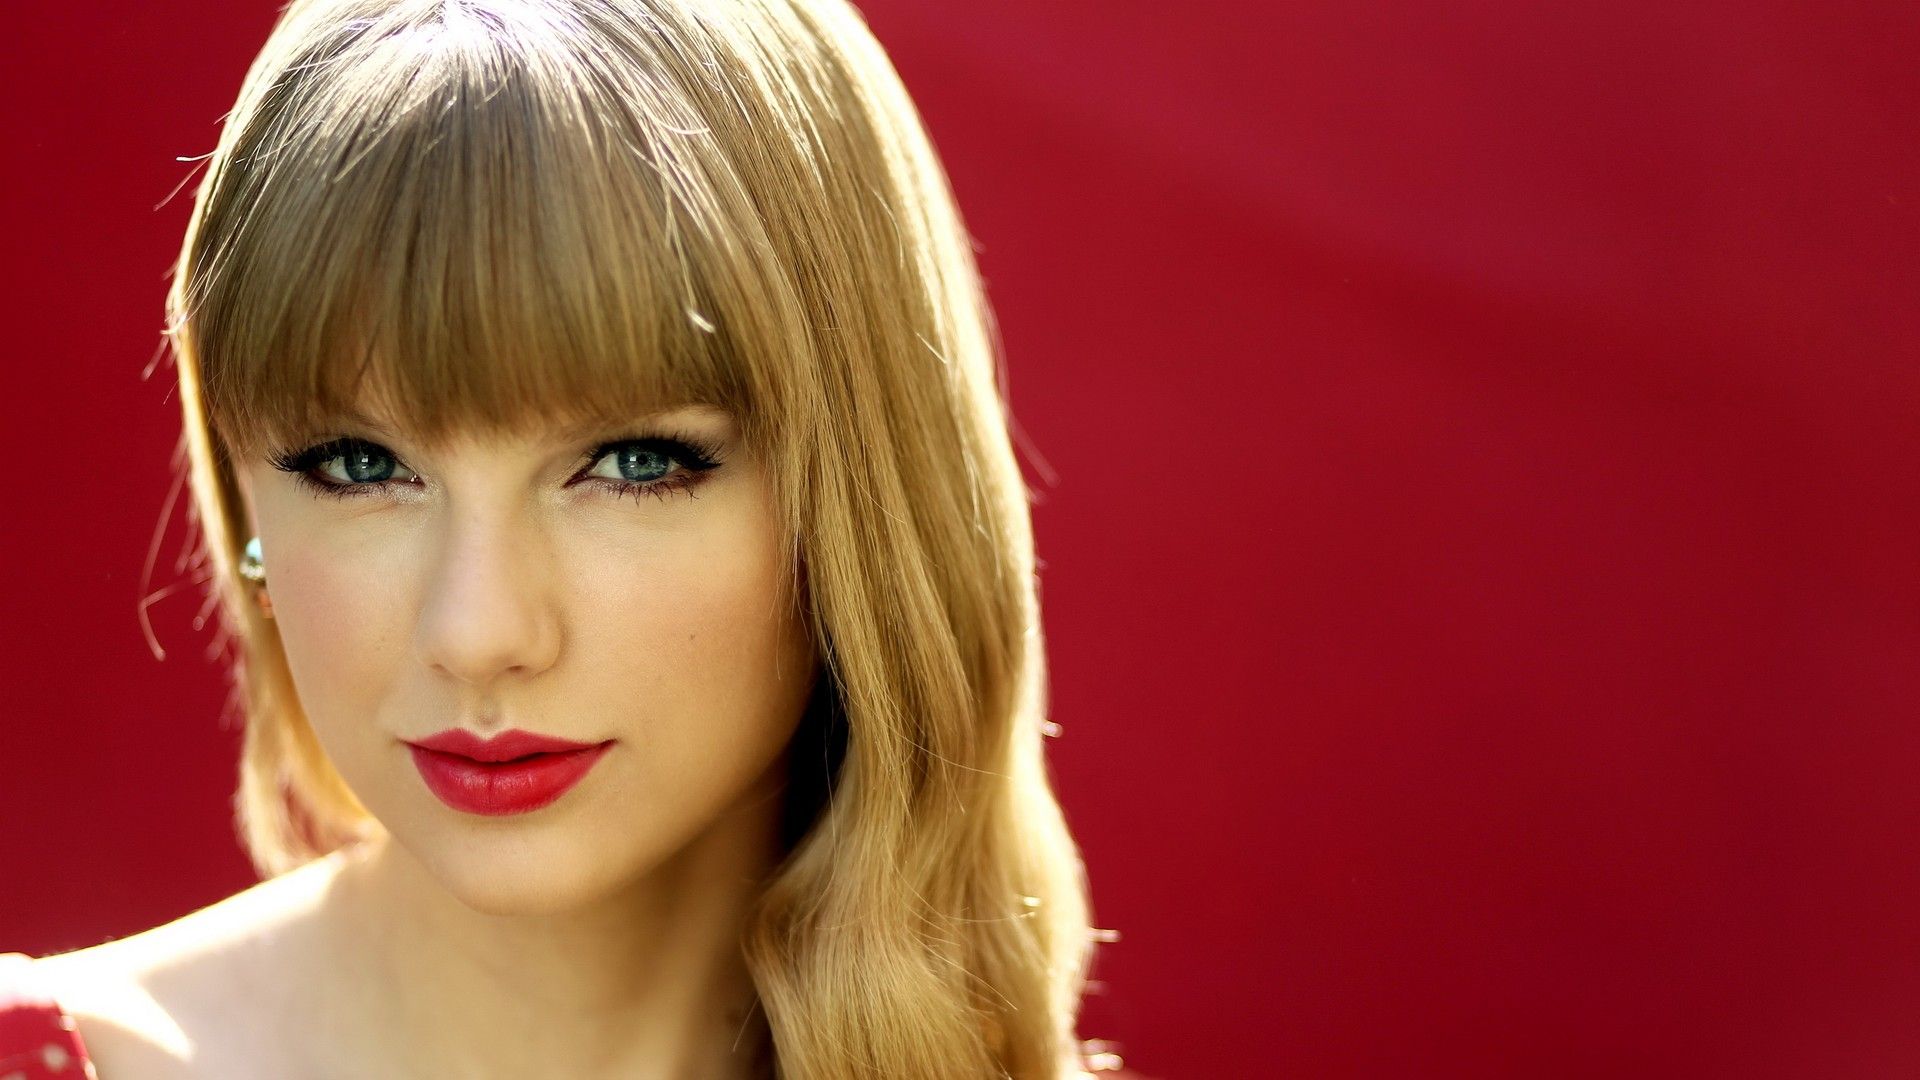 Red Taylor Swift 2013 HD Wallpaper